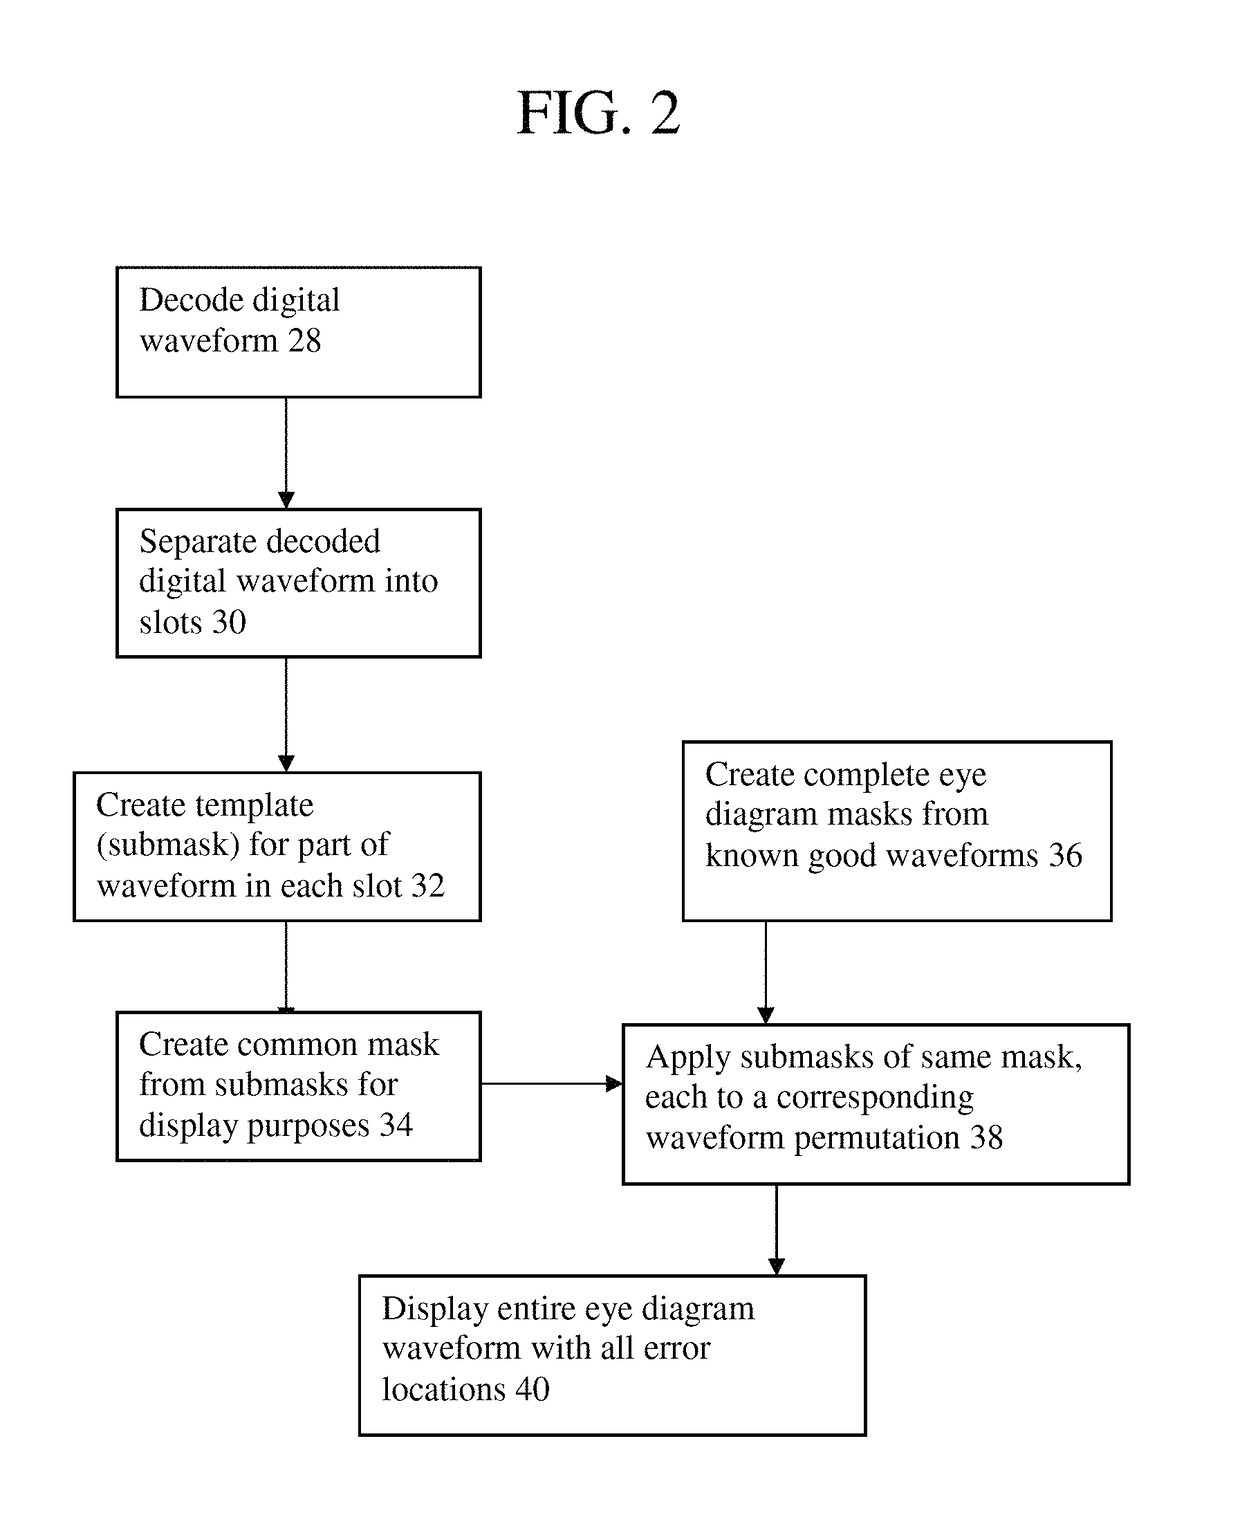 Method and arrangement for eye diagram display of errors of digital waveforms